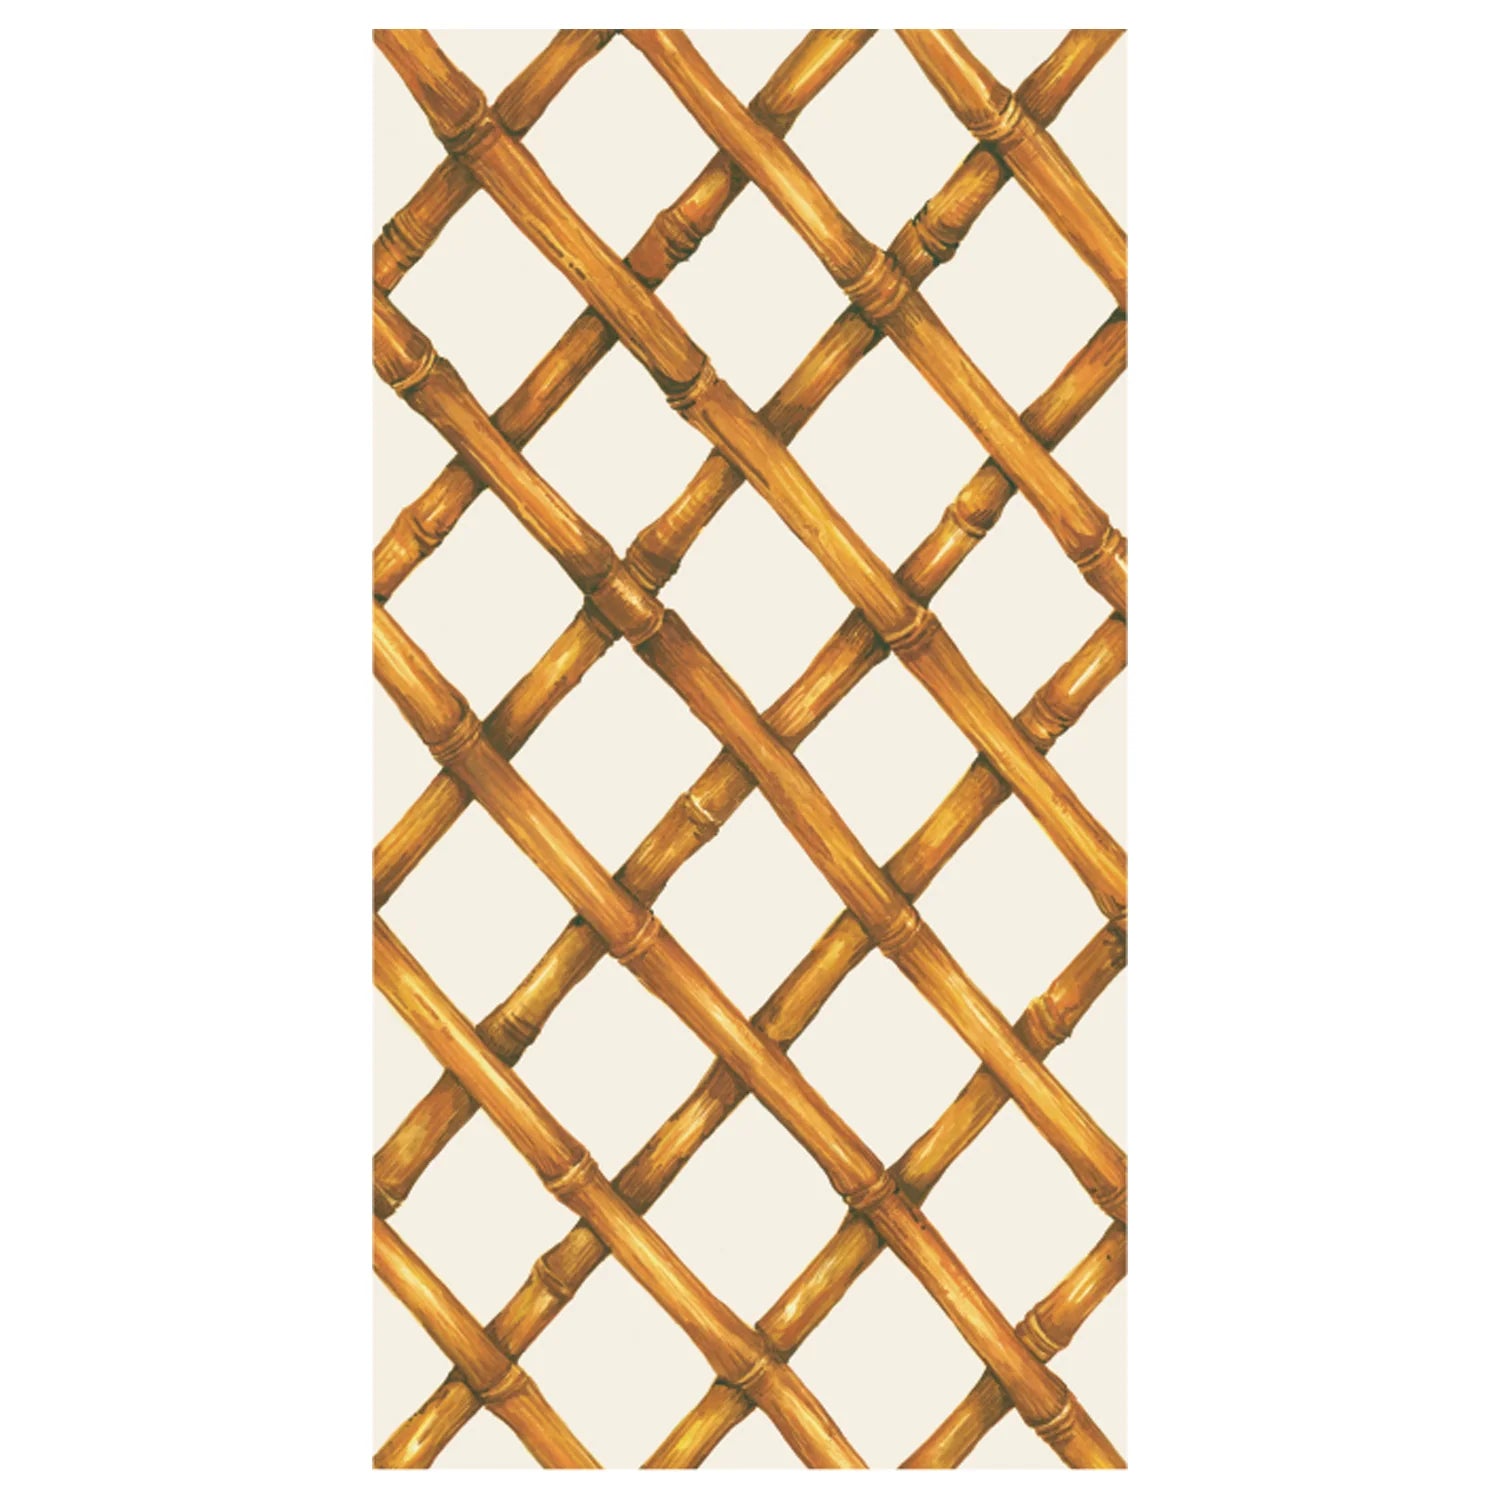 Bamboo Lattice Guest Napkin - set of 16